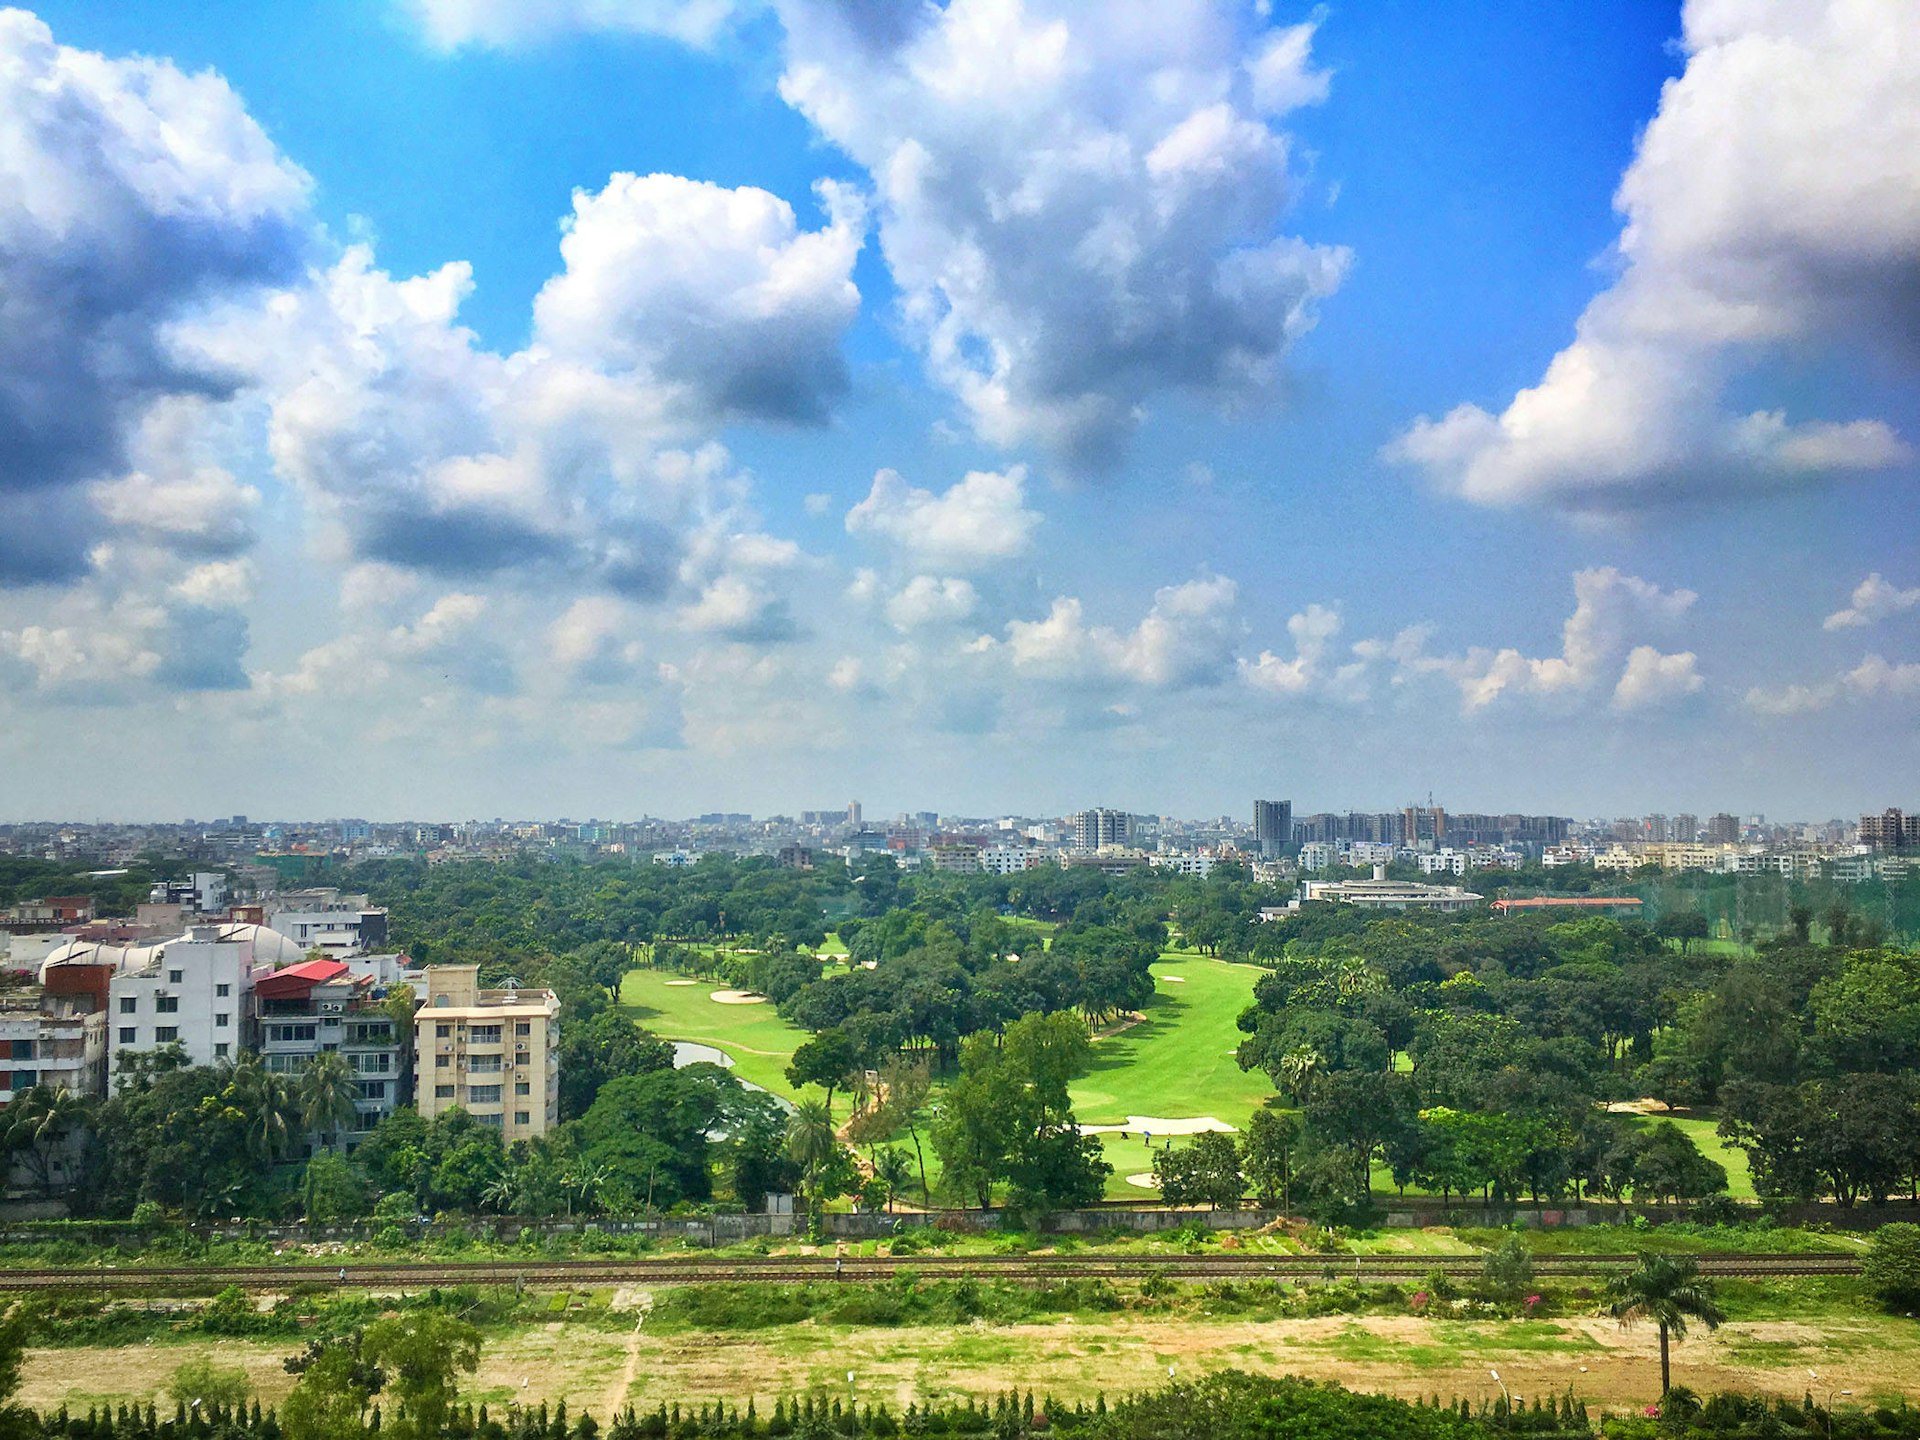 Clouds blow over Dhaka's urban greenery